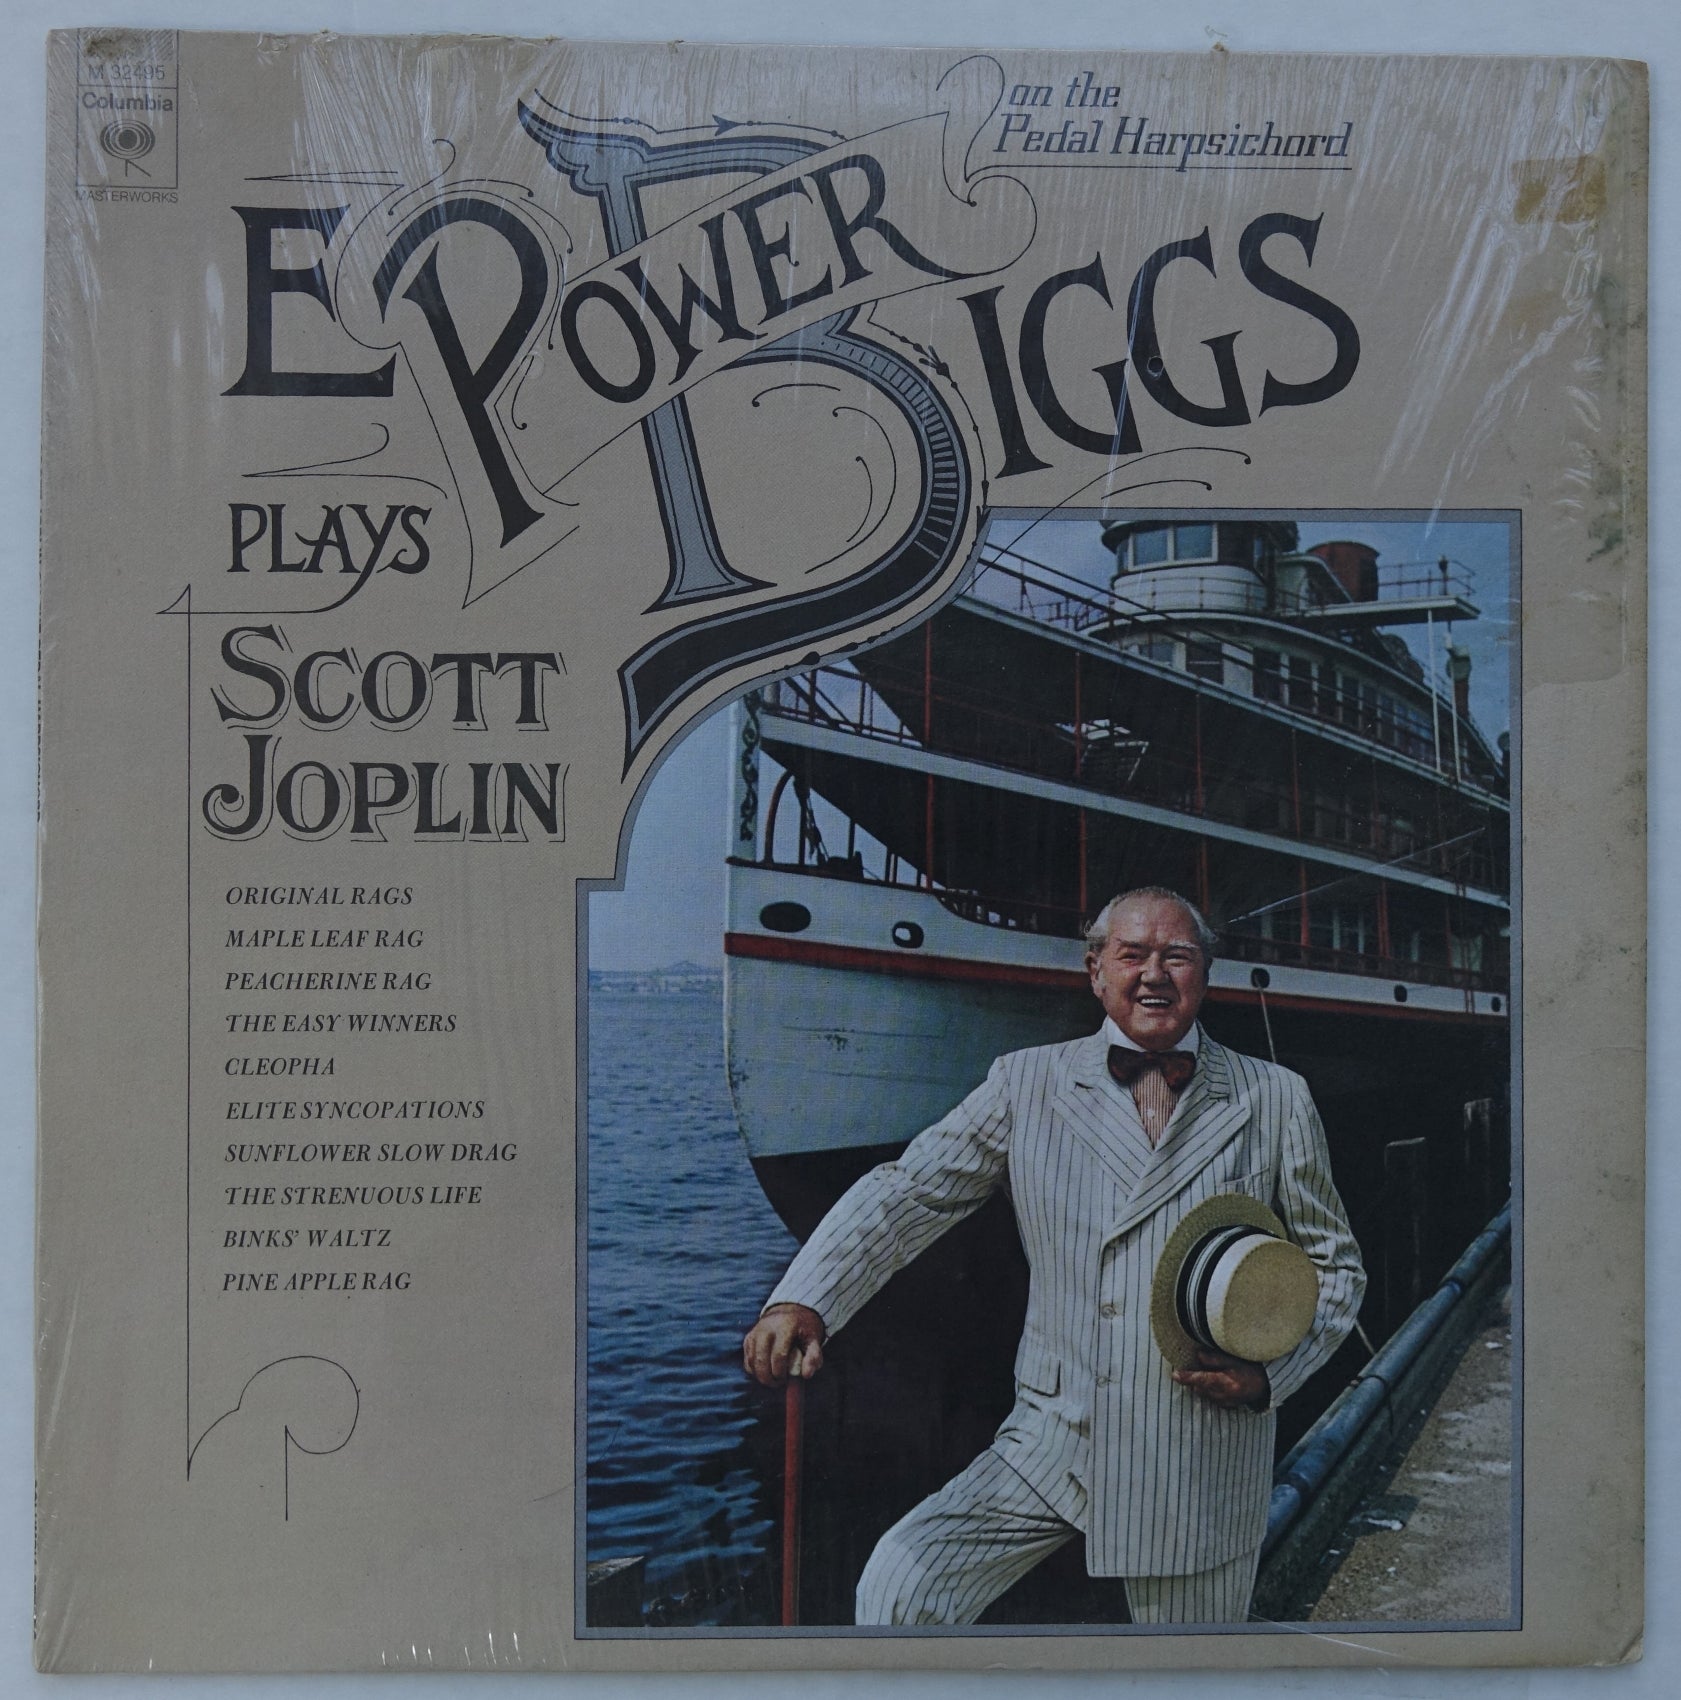 COL004: E. Power Biggs Plays Scott Joplin on the Pedal Harpsichord